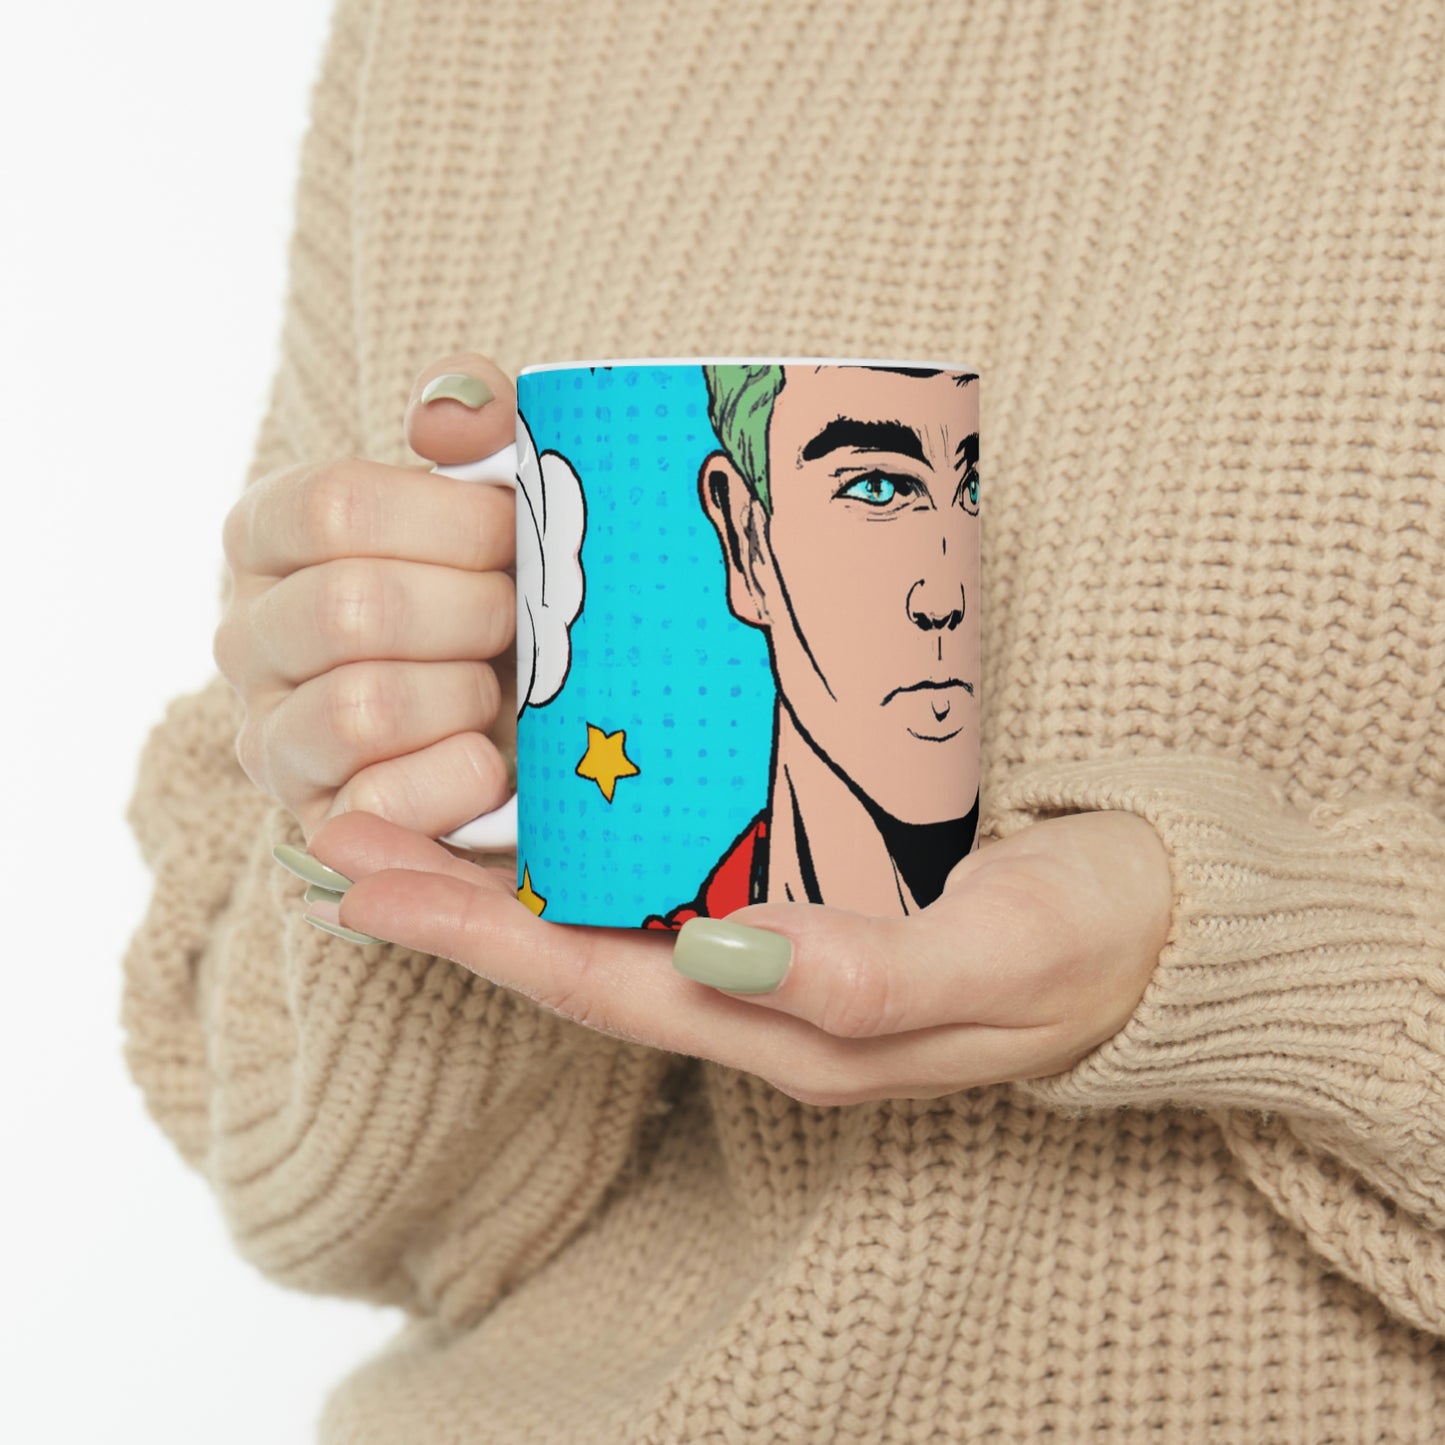 "My Hero, My Pop Art!" - The Alien Ceramic Mug 11 oz